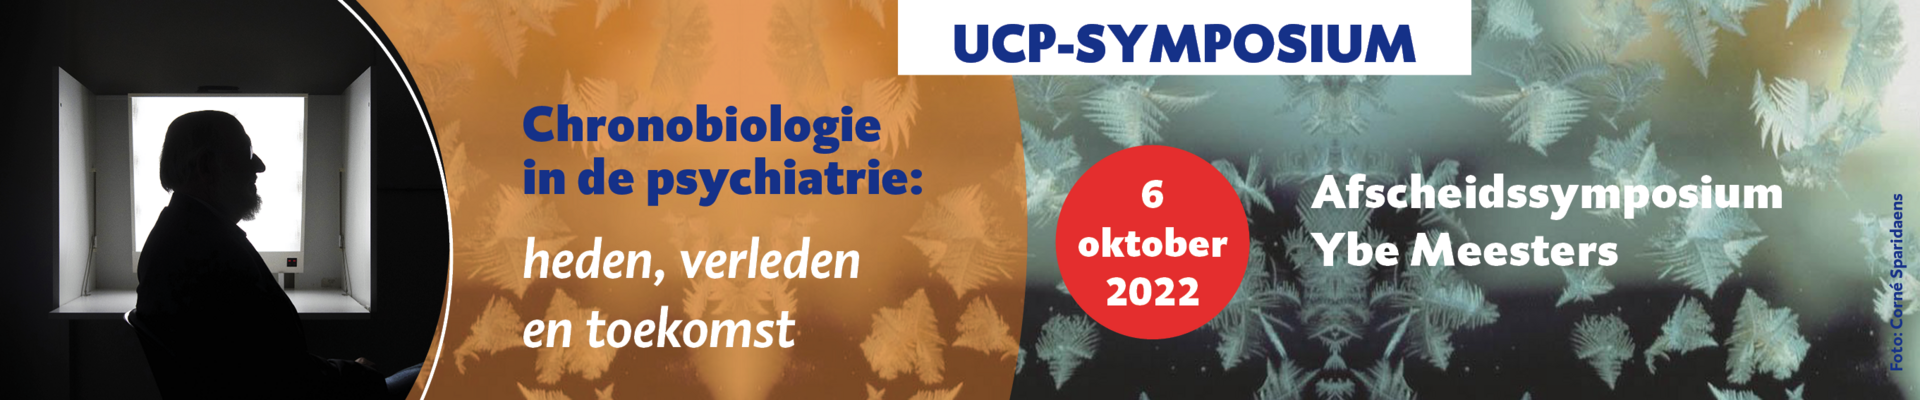 UCP-symposium / Afscheidssymposium Ybe Meesters